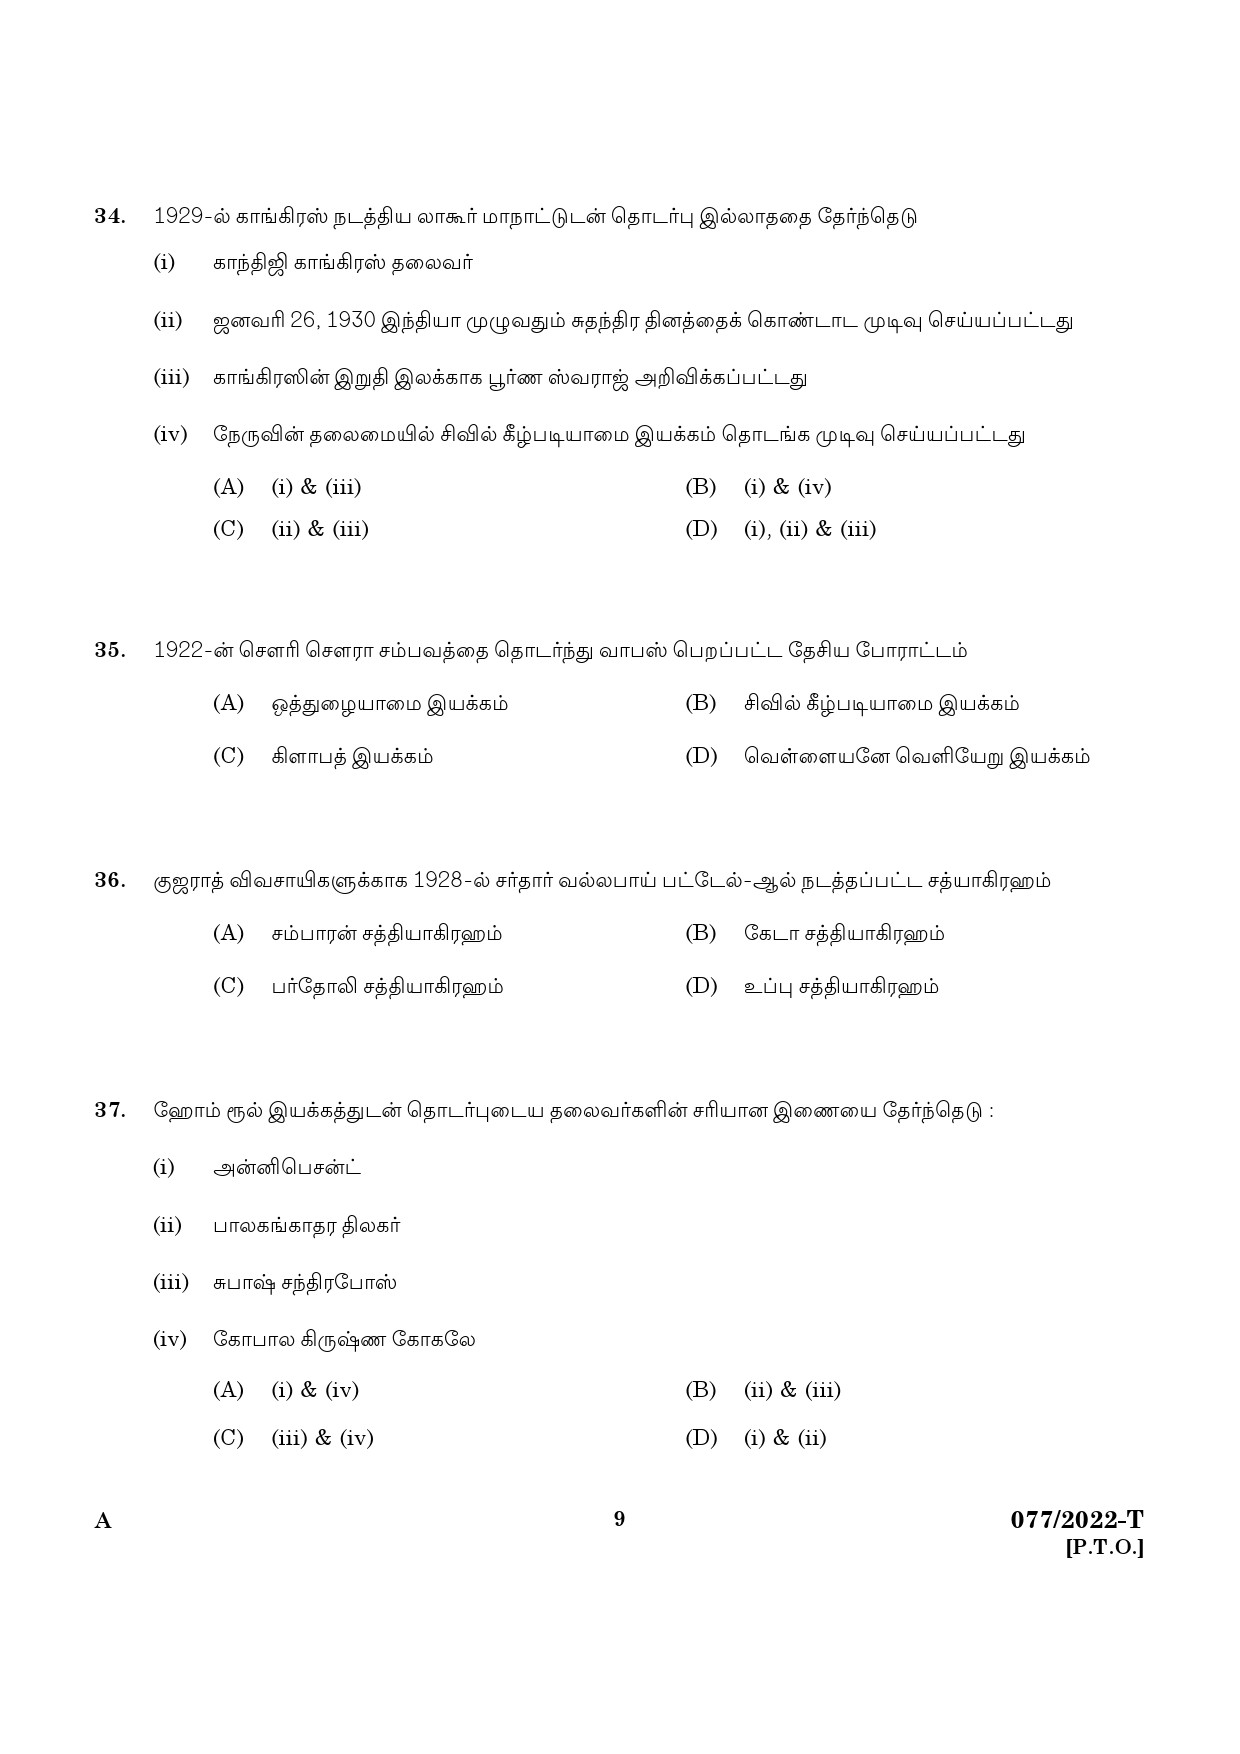 KPSC Common Preliminary Exam 2022 Upto SSLC Level Stage VI Tamil 0772022 T 7